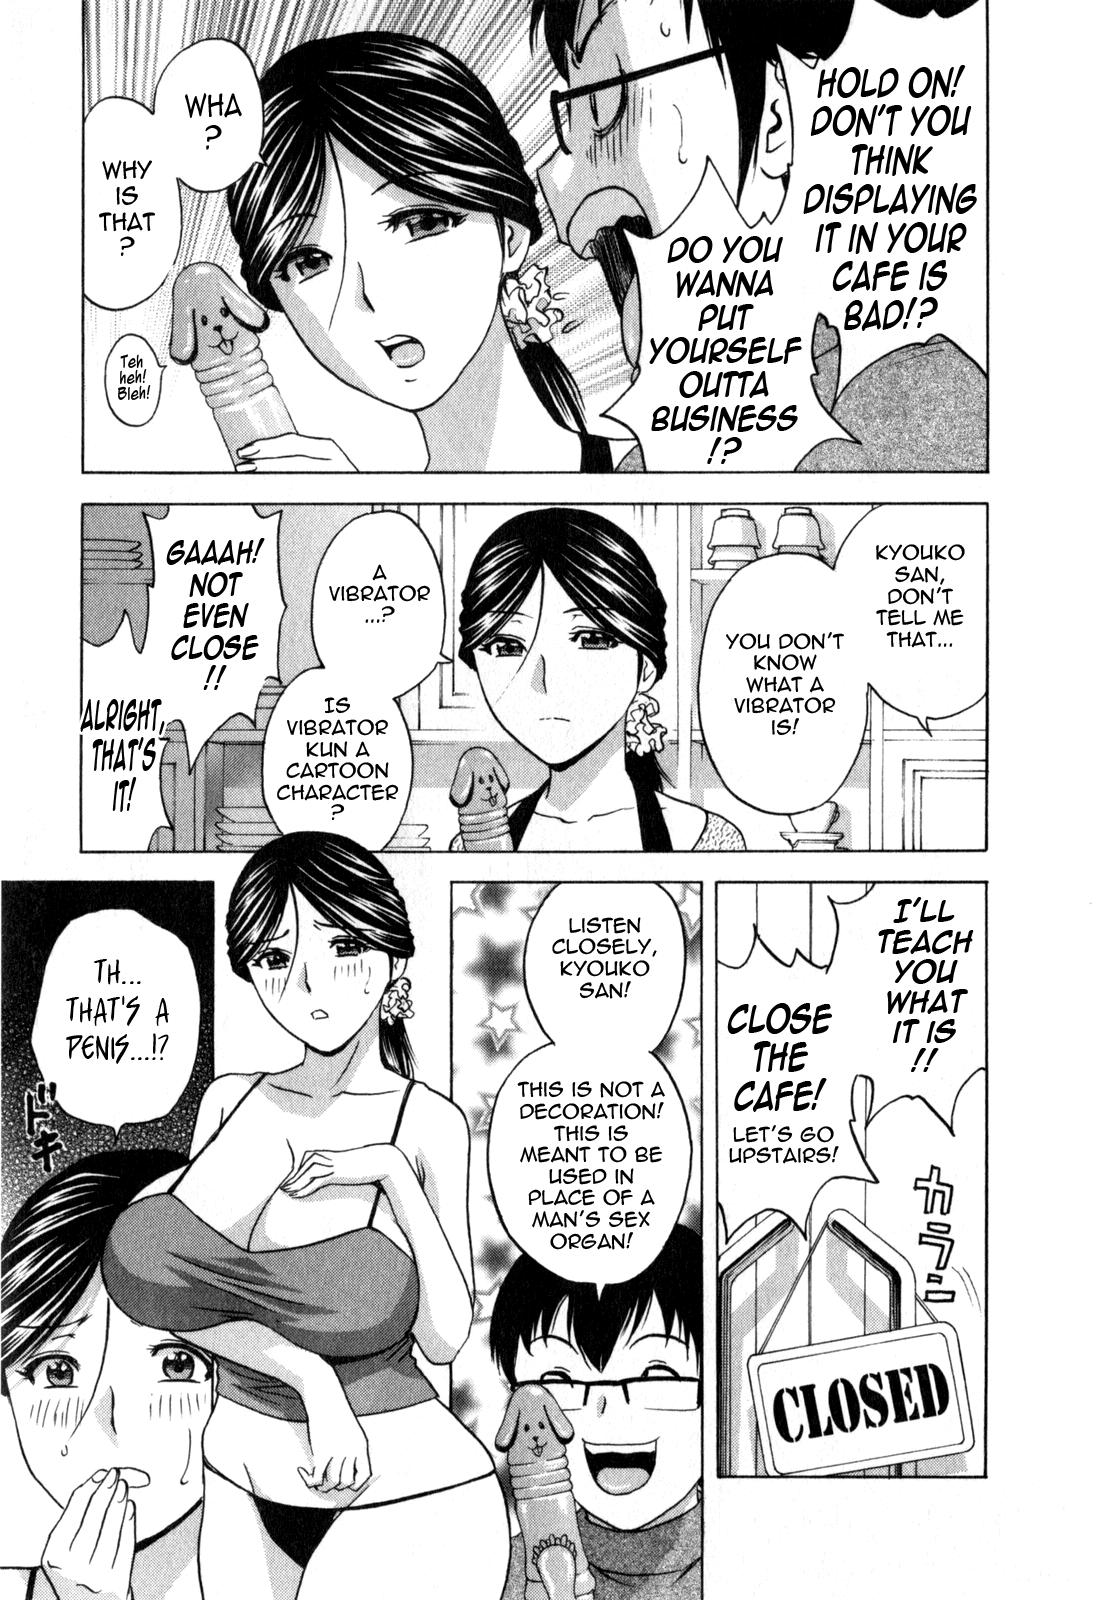 Life with Married Women Just Like a Manga 3 16